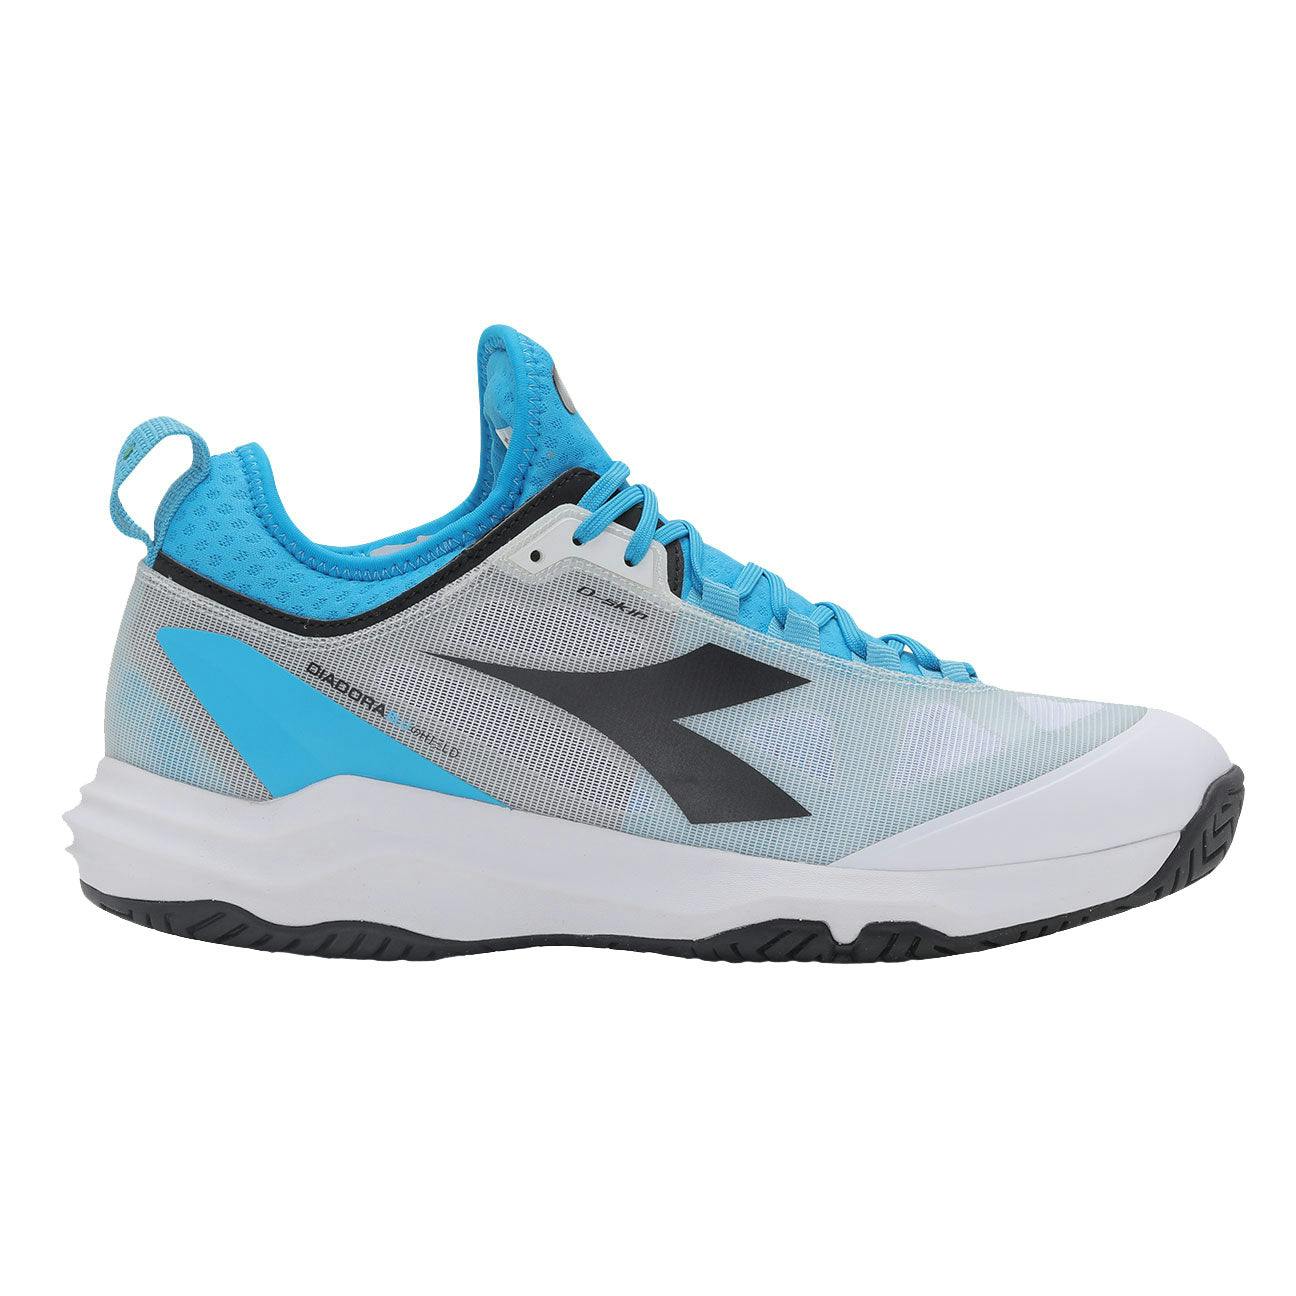 Diadora Speed Blushield Fly 3+ Mens Tennis Shoes - WHT/BK/RD C6714 / D Medium / 13.5